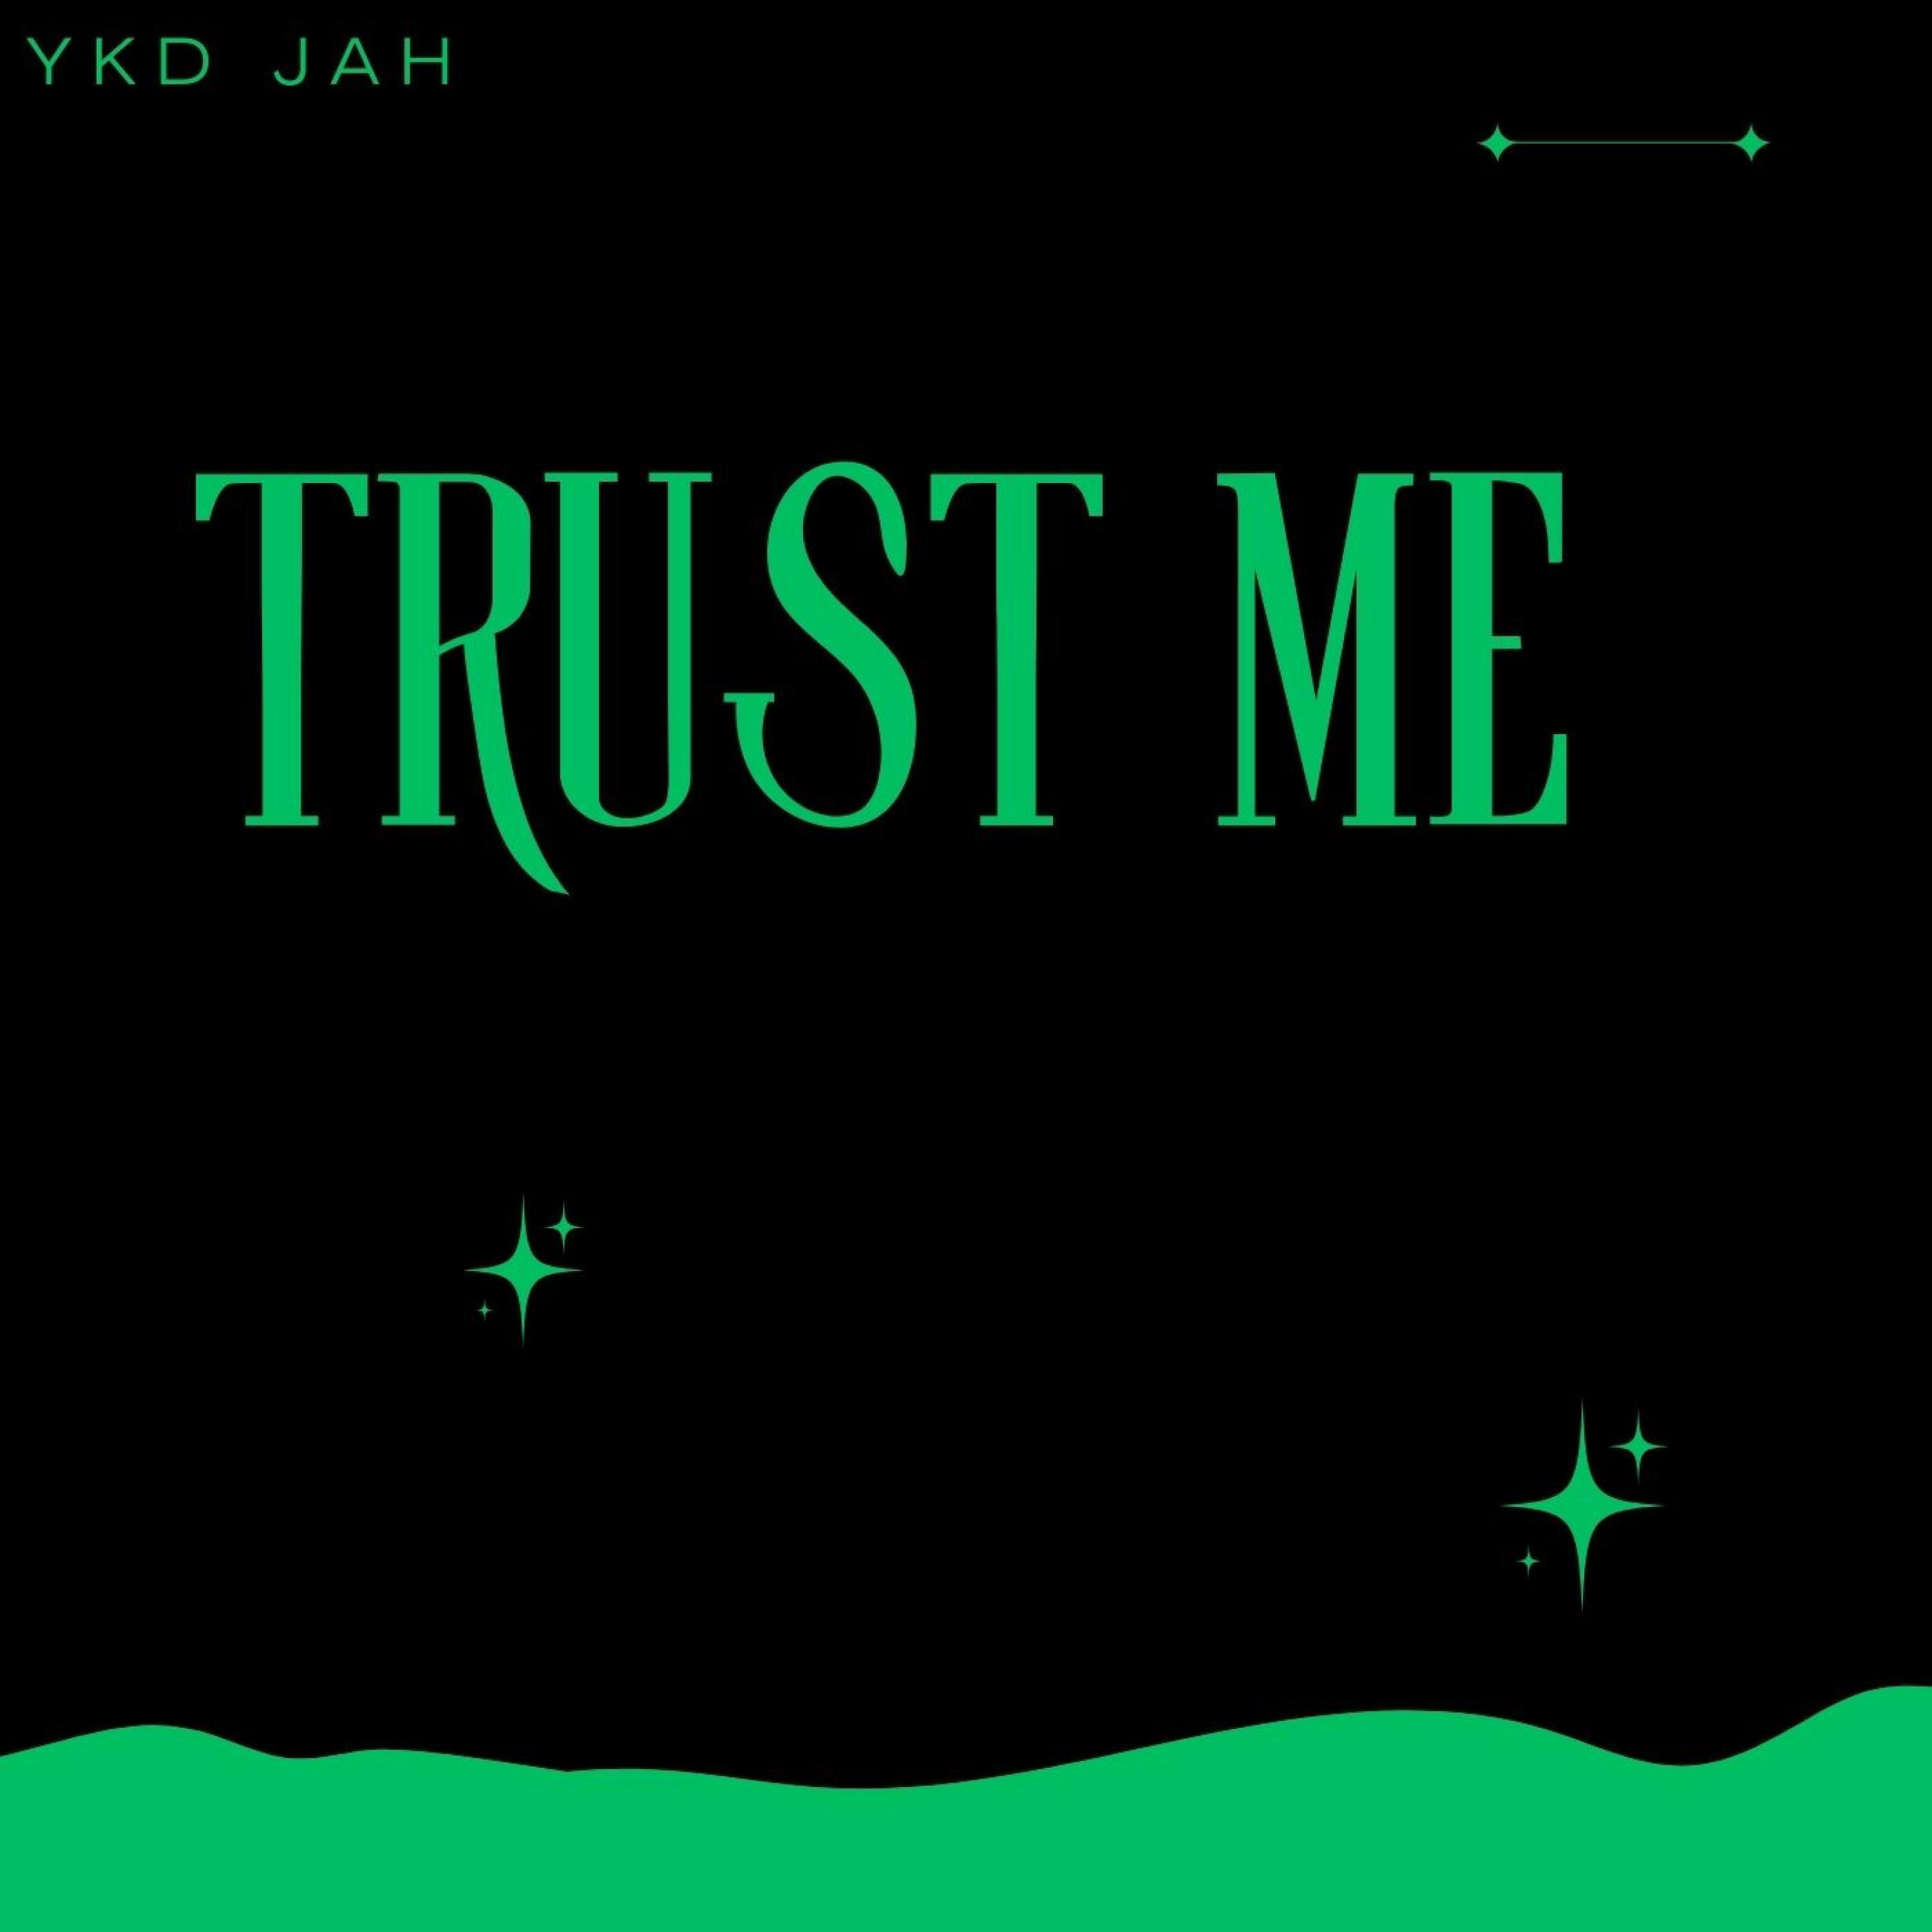 YKD Jah - TRUST ME